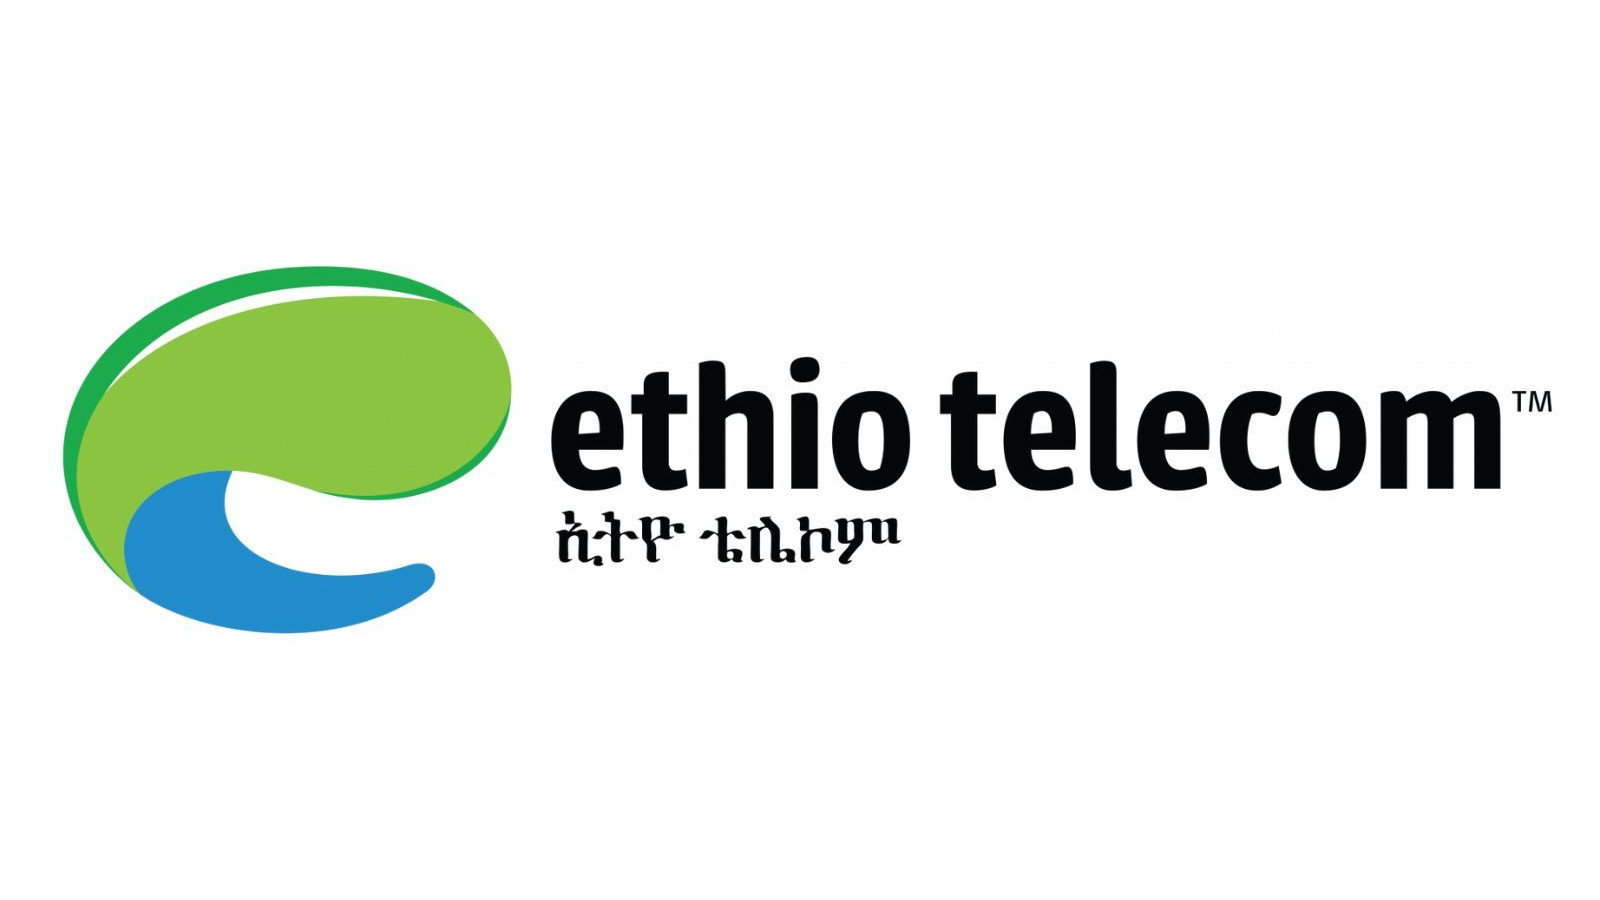 Ethiotelecom 5 ETB Mobile Top-up ET, 0.68$